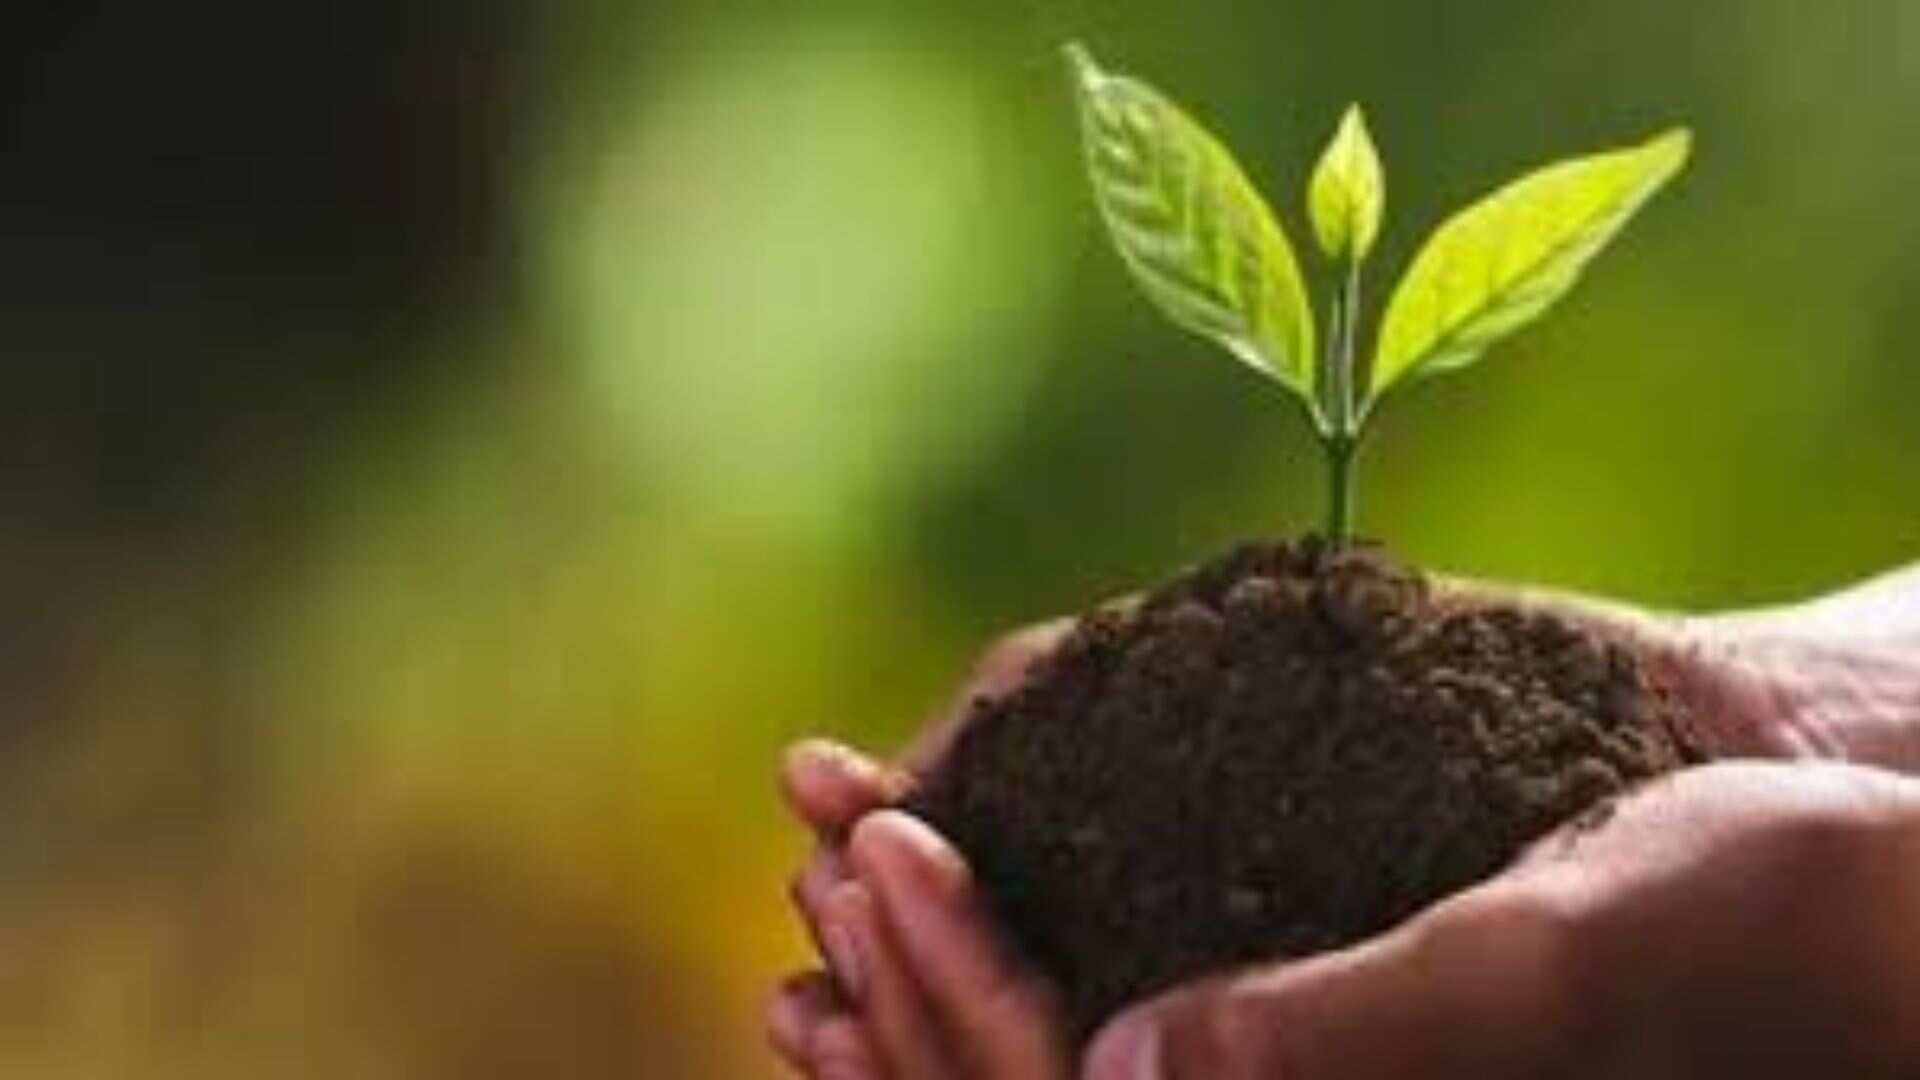 BSF, SBI Collaborate For Tree Plantation Drive In Srinagar